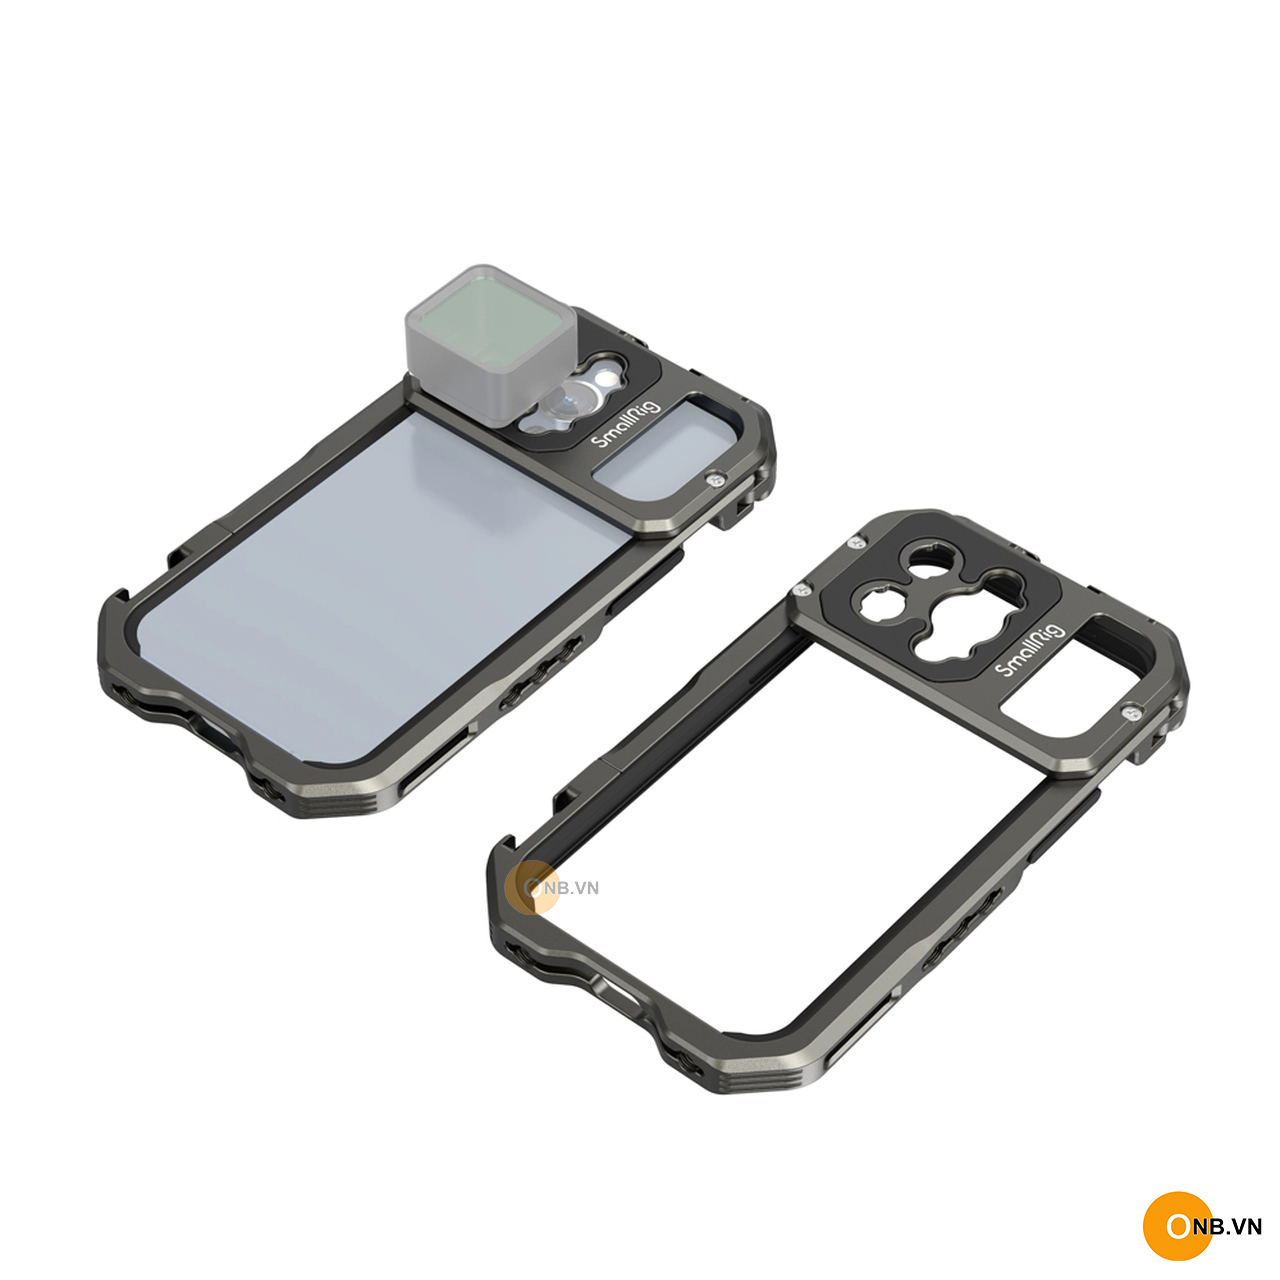 SmallRig Cage i-Phone 13 Pro Max - Khung bảo vệ kim loại hỗ trợ quay 3561